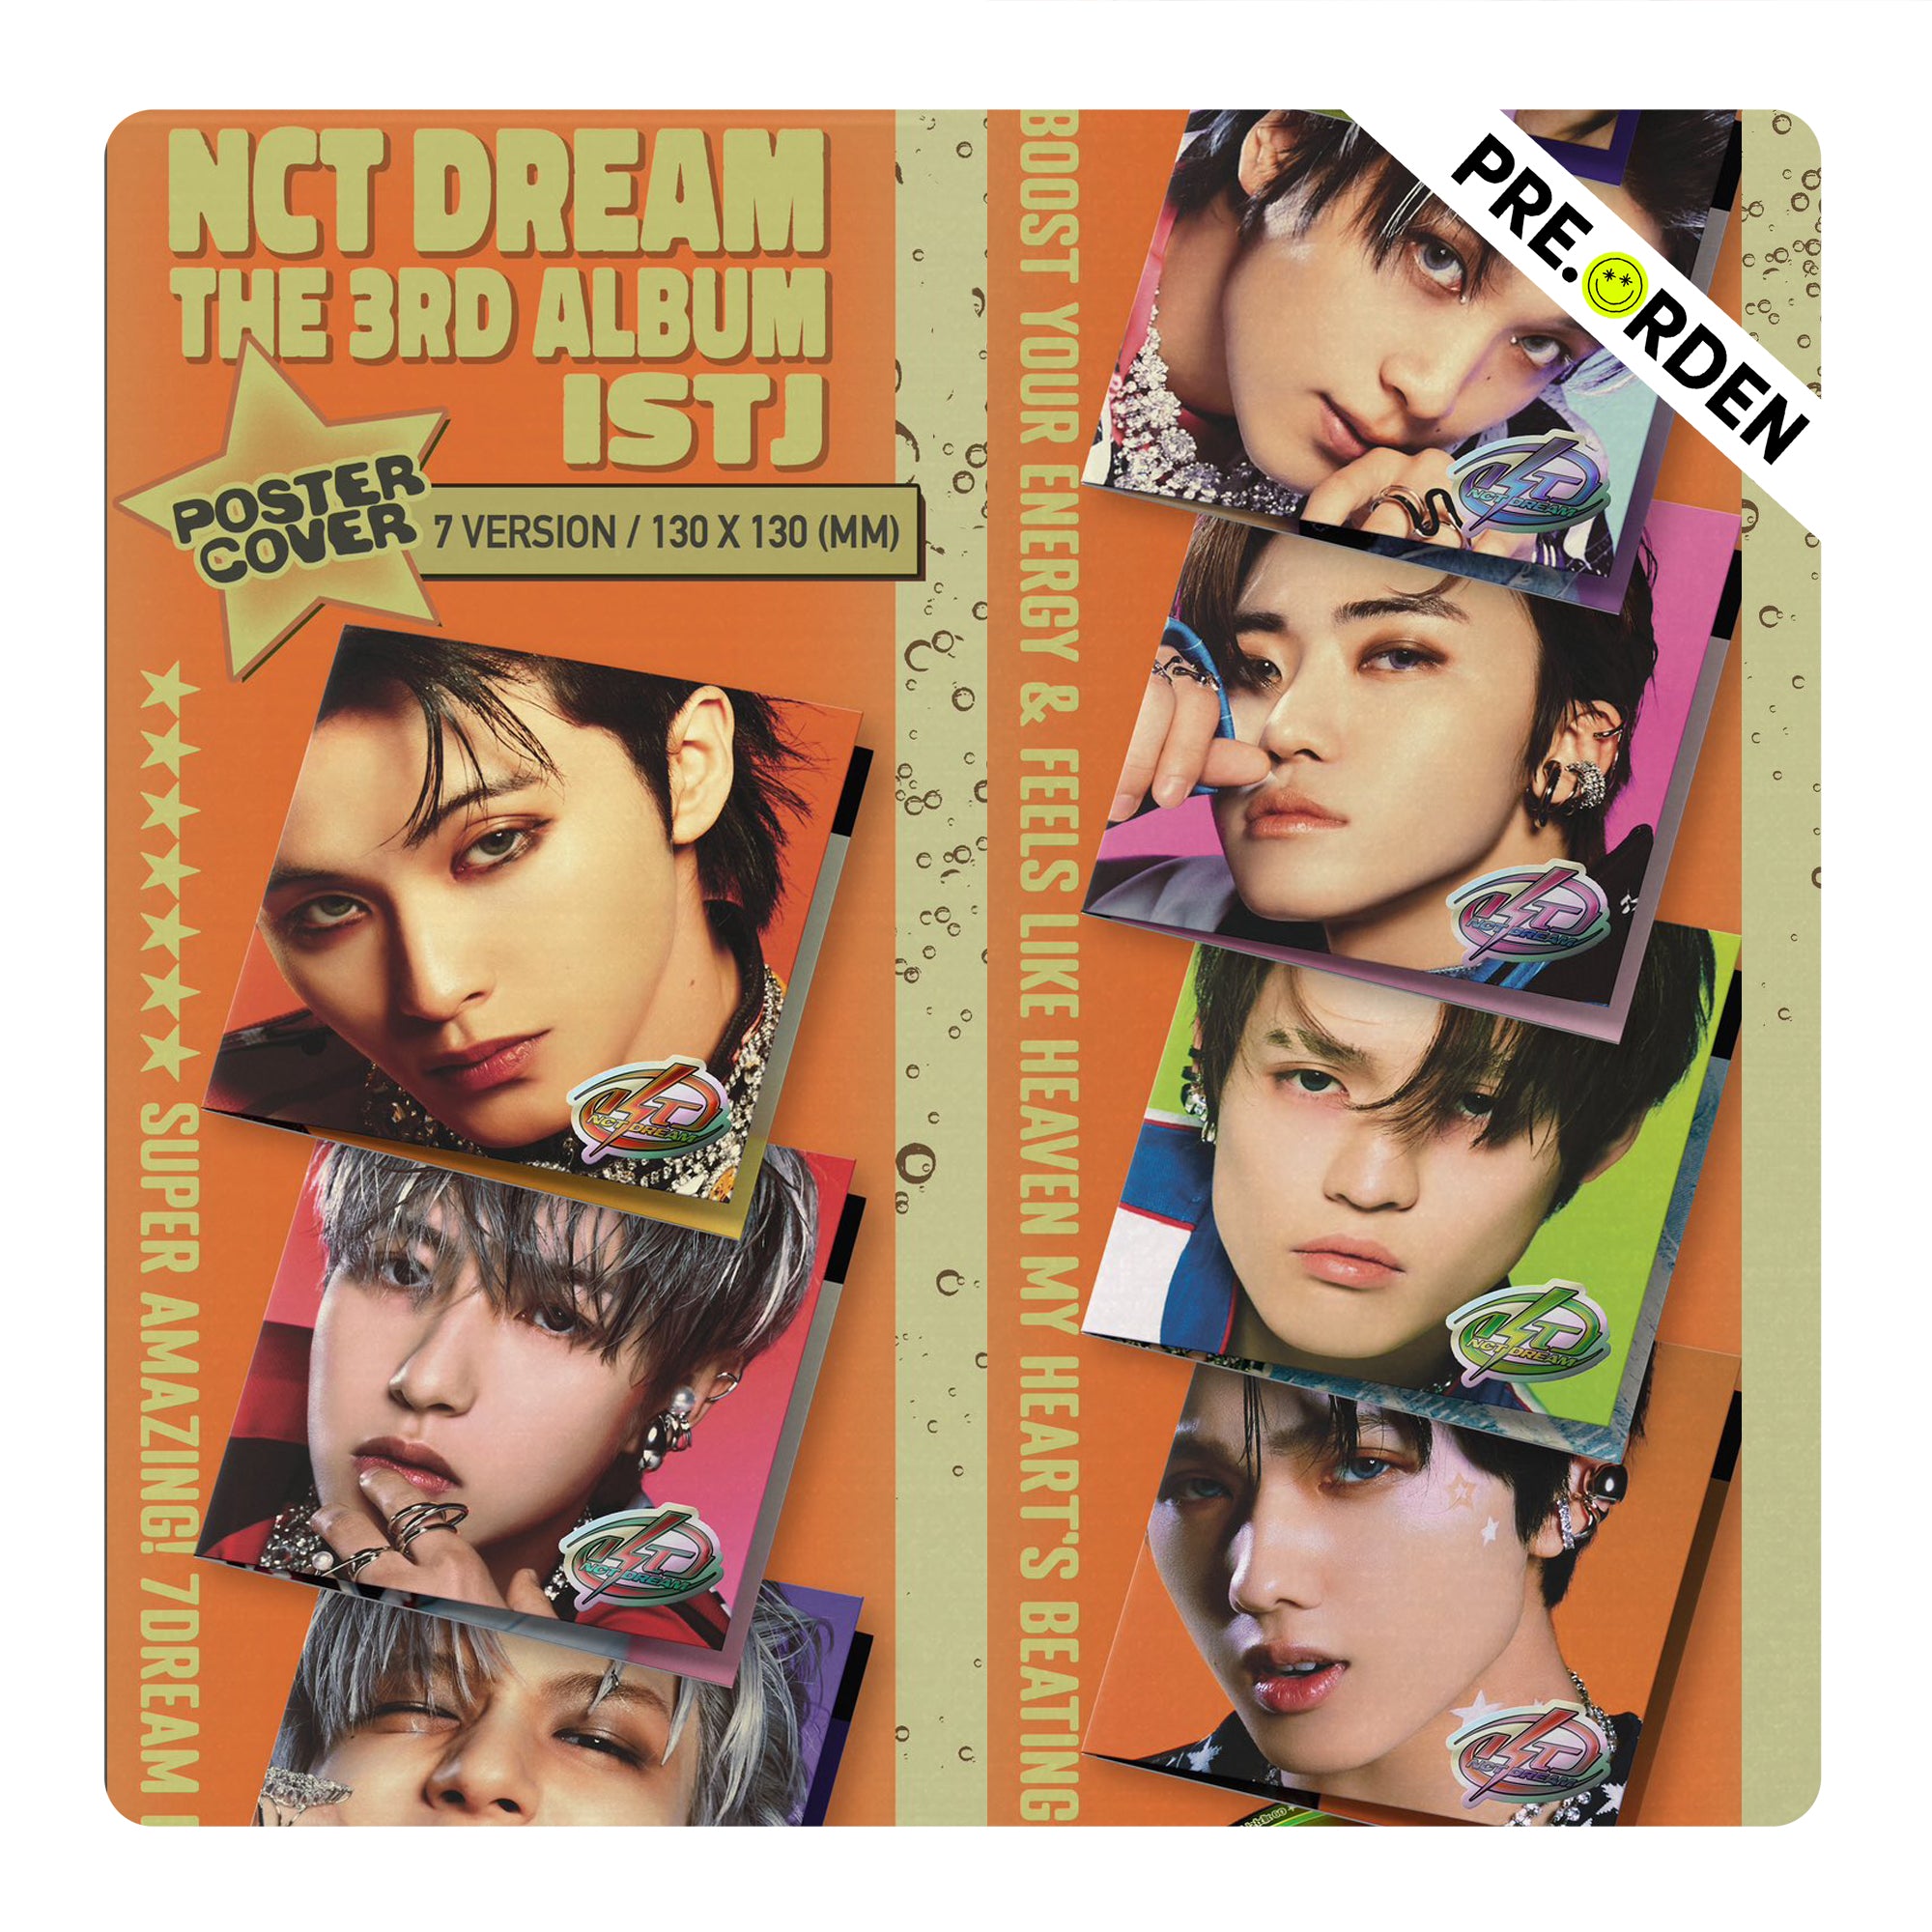 NCT DREAM - ISTJ (Poster Ver.)